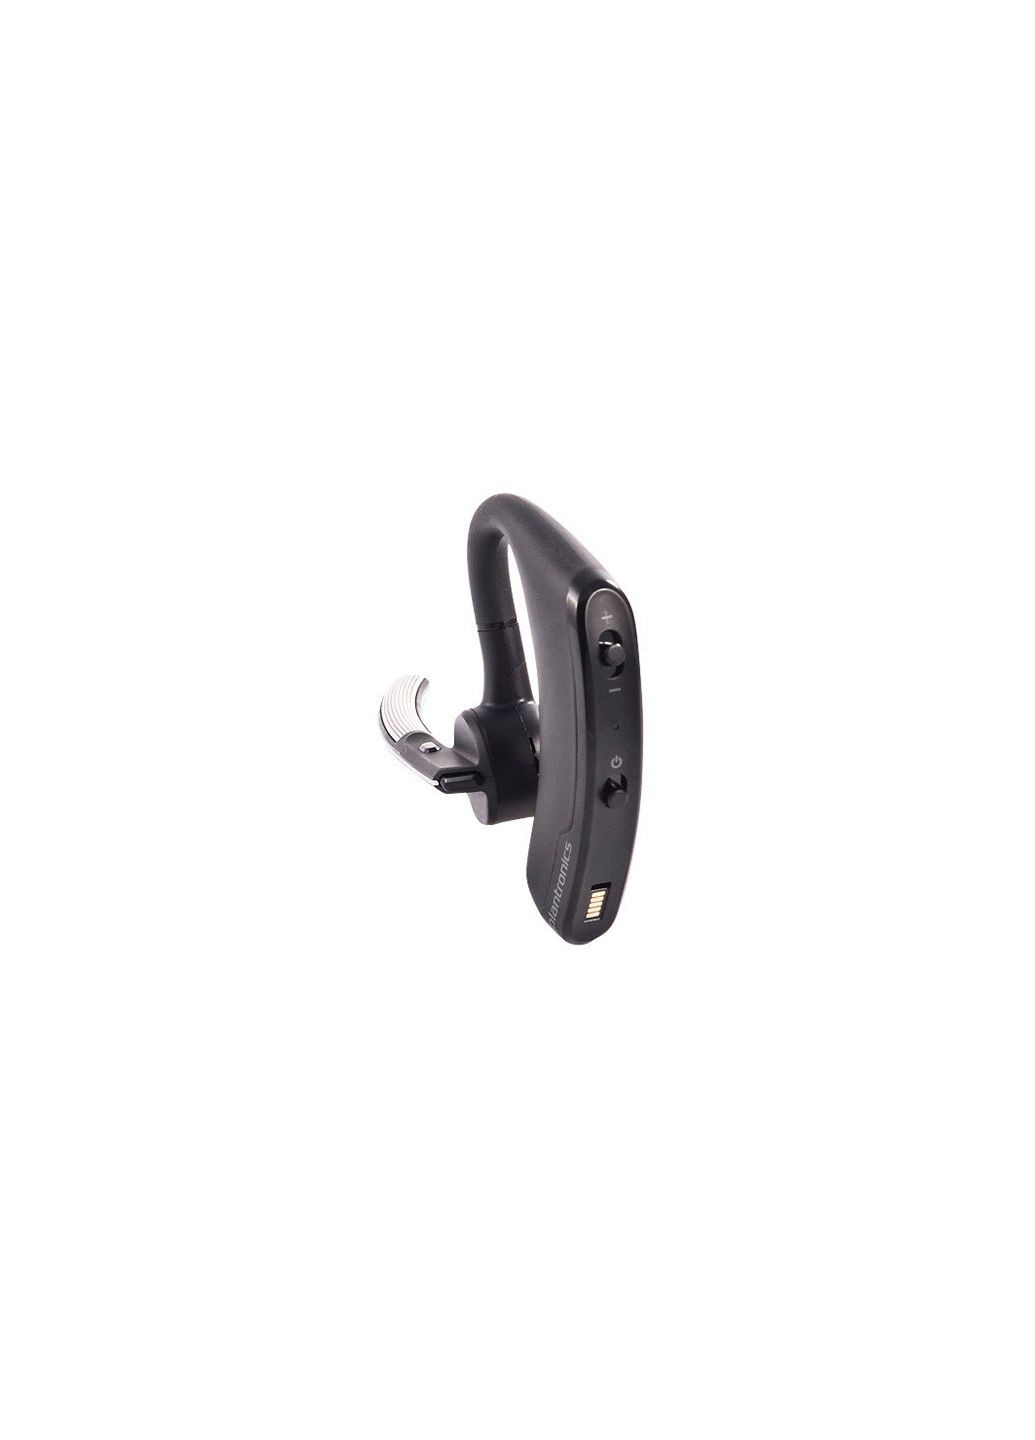 Bluetoothгарнитура Voyager Legend стандарт без зарядного чехла Plantronics (280876800)